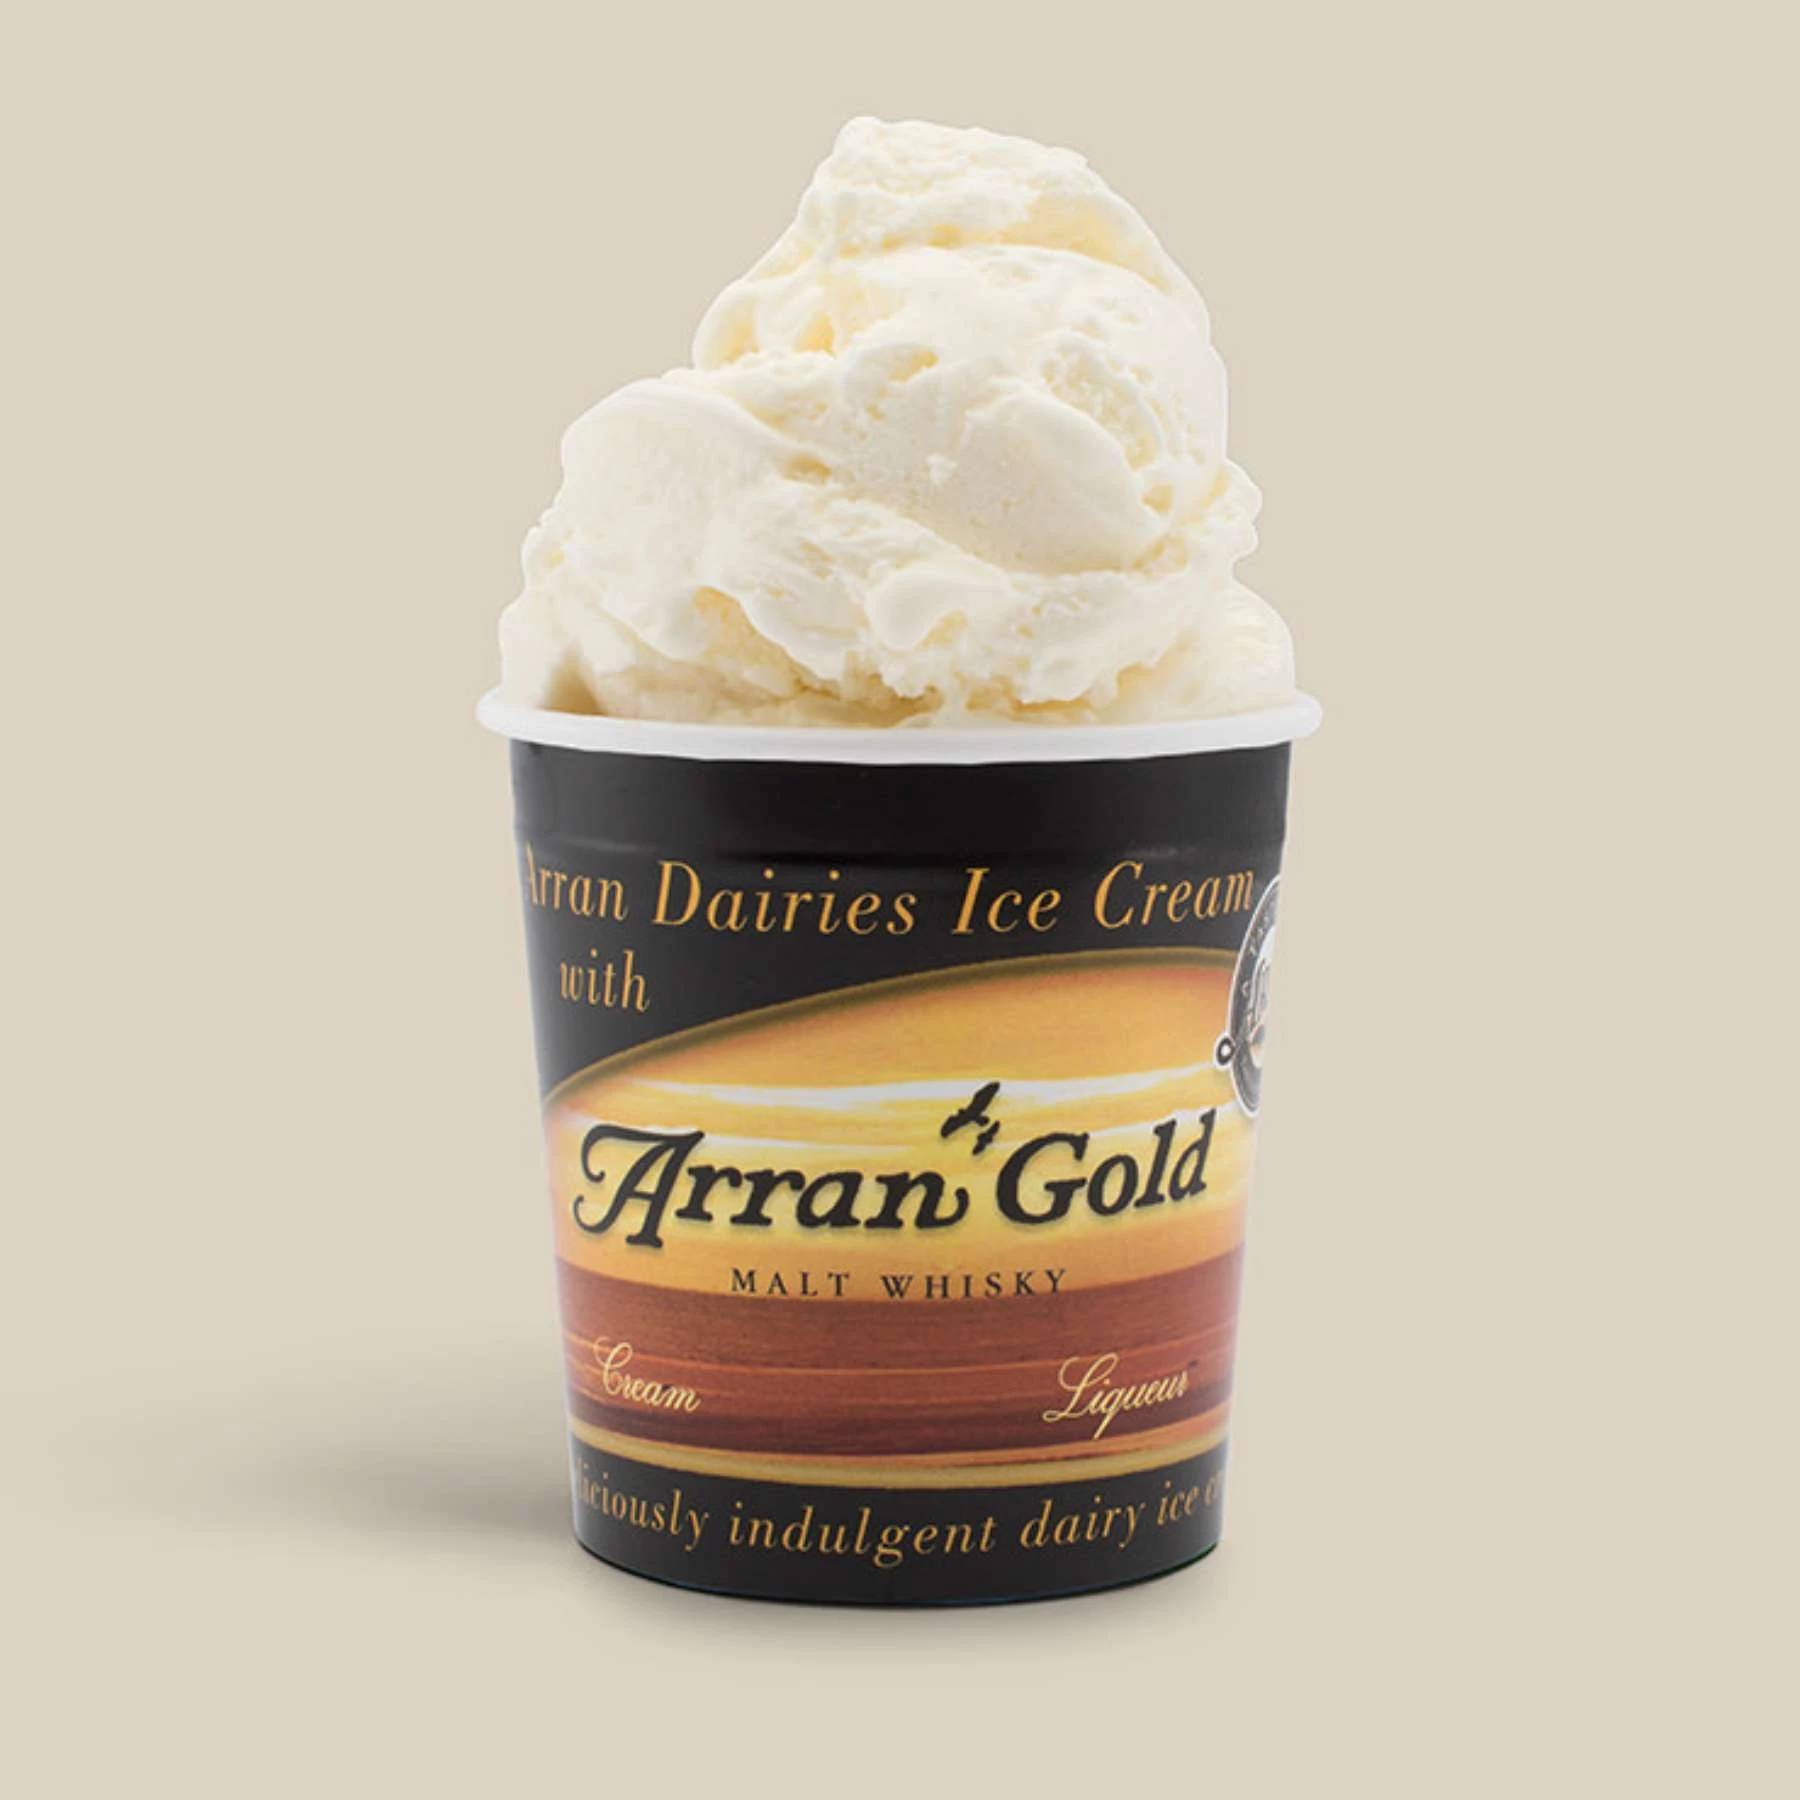 Isle of Arran Ice Cream (4) Arran Gold